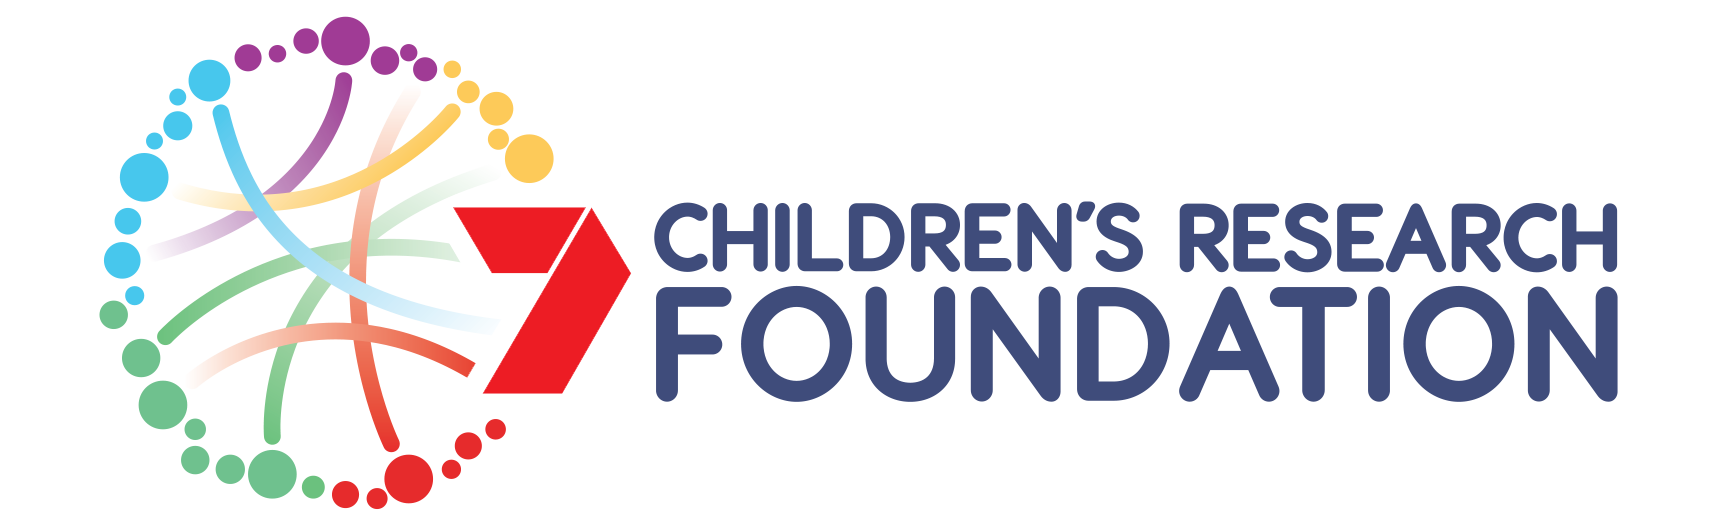 Channel 7 Children's Research Foundation logo